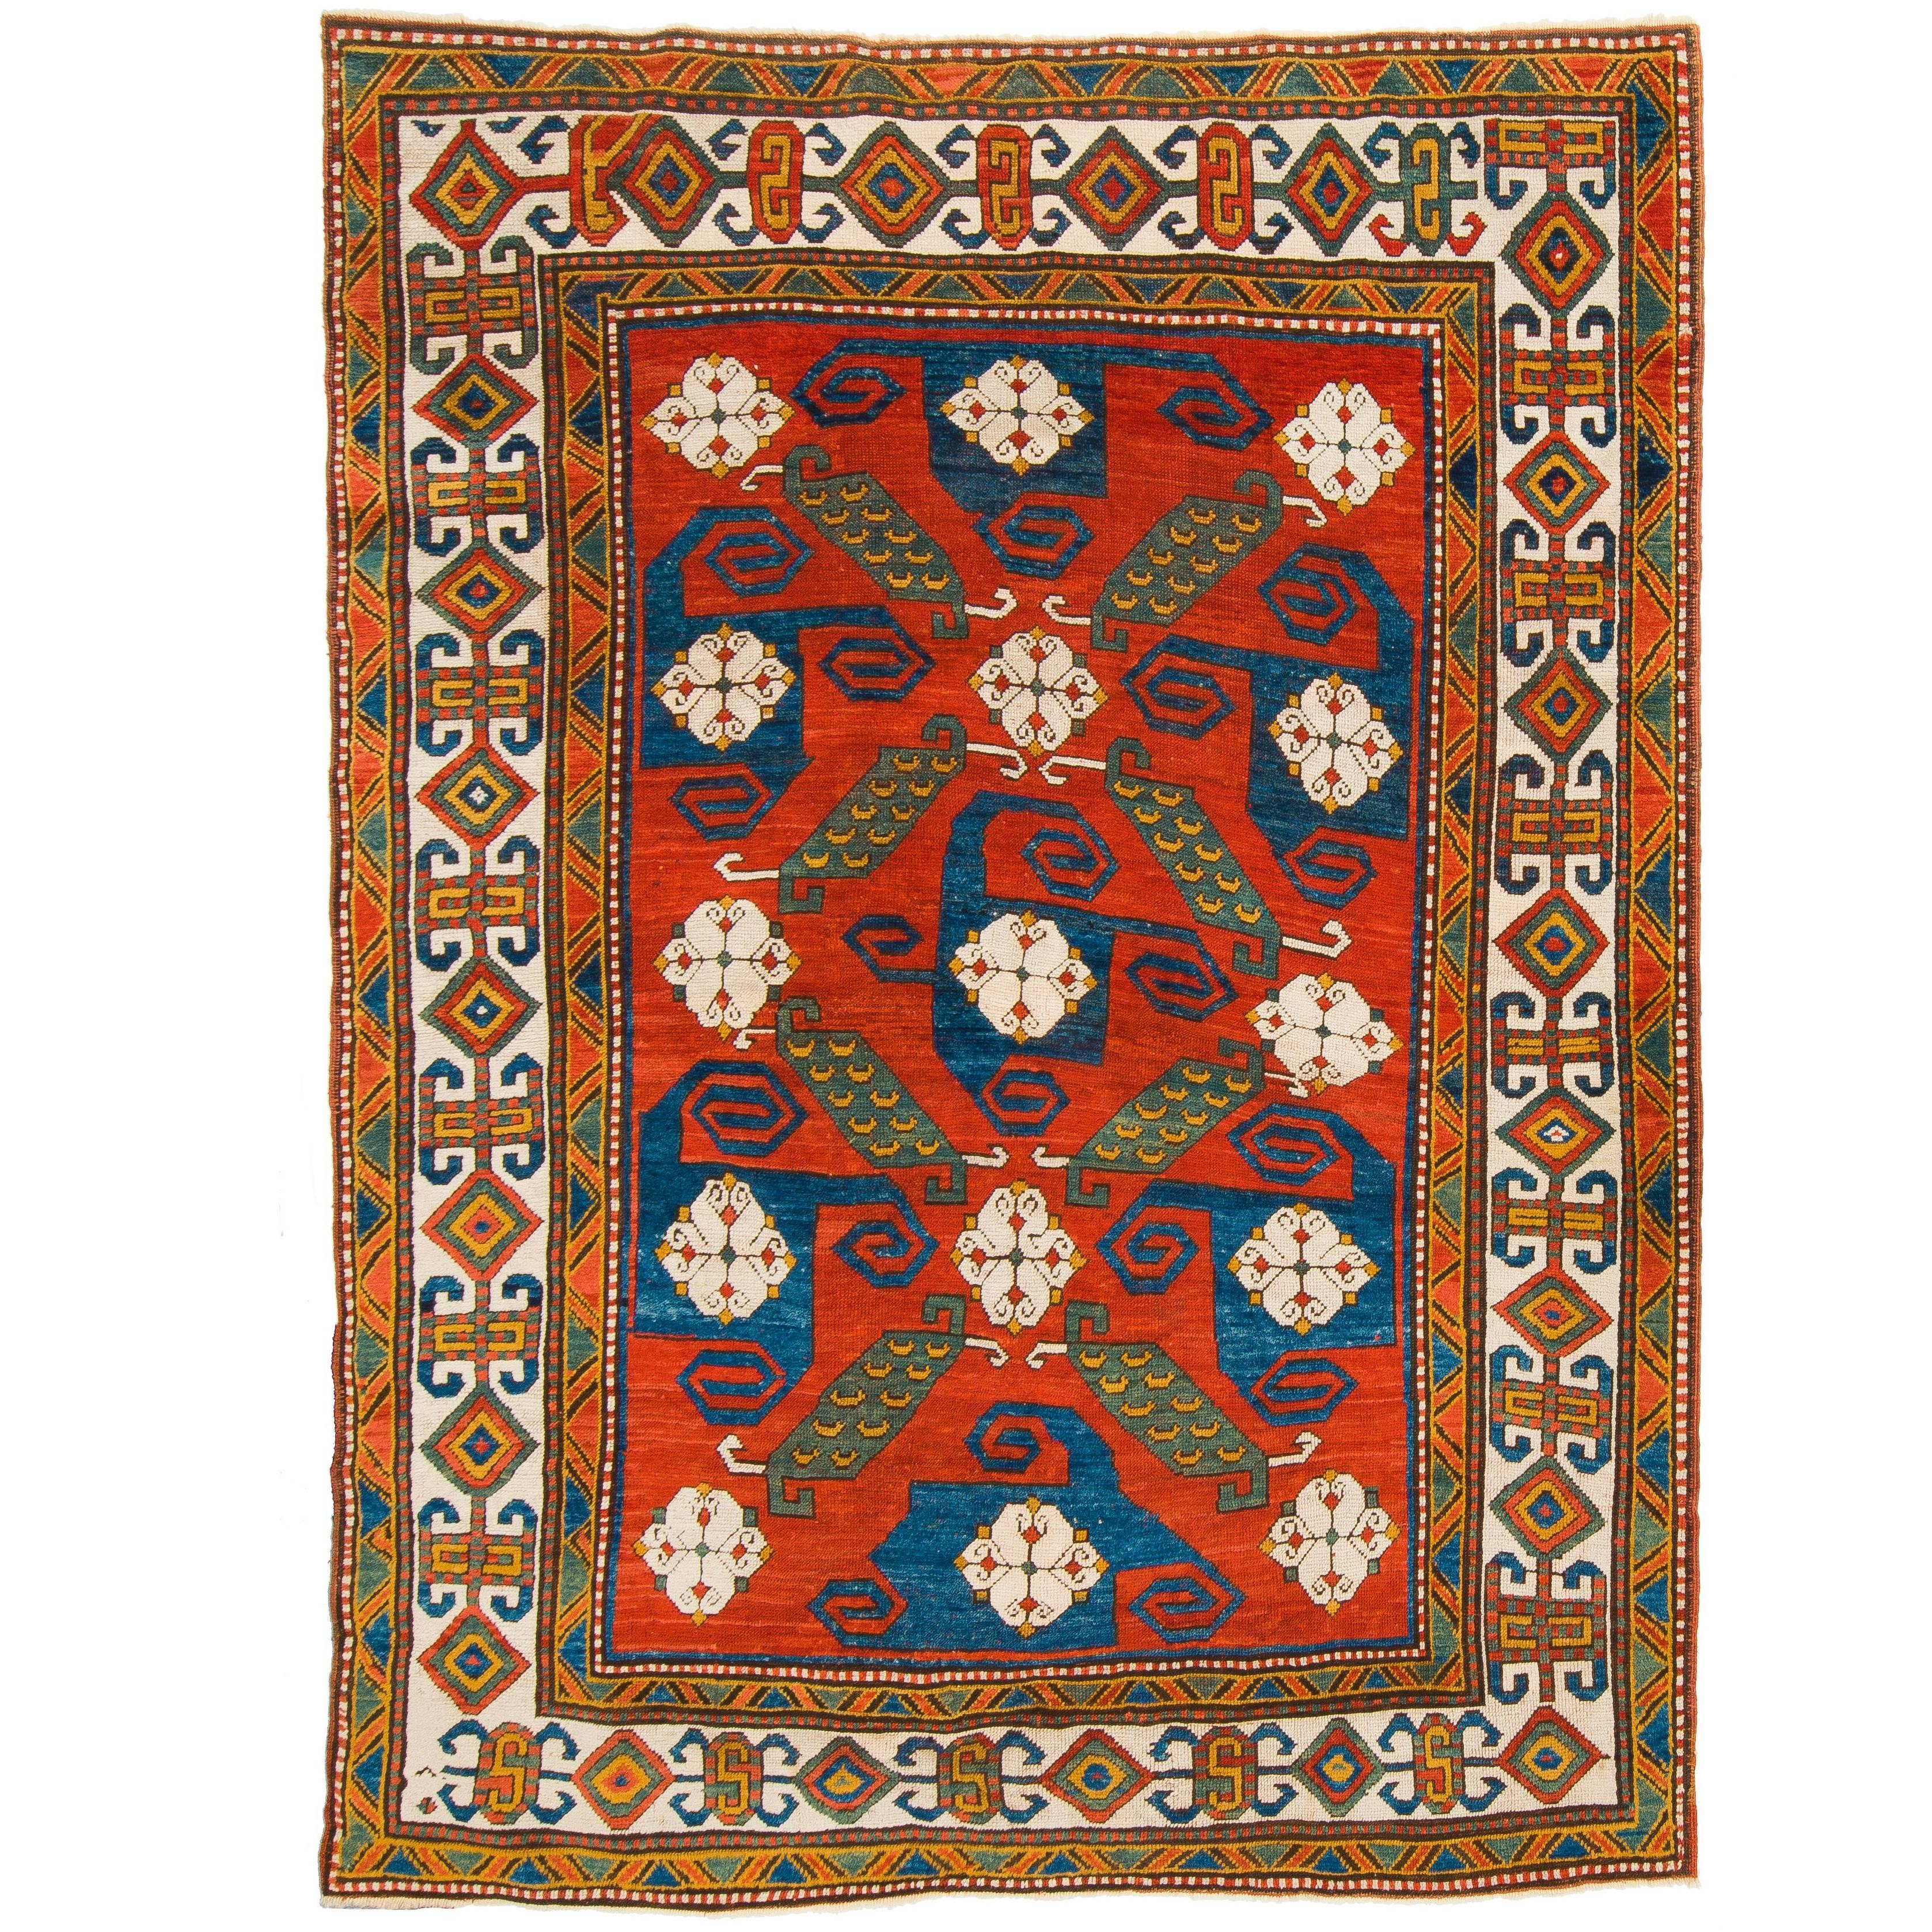 Outstanding Antique Caucasian Pinwheel Kazak Rug. Top Shelf Collectors Carpet